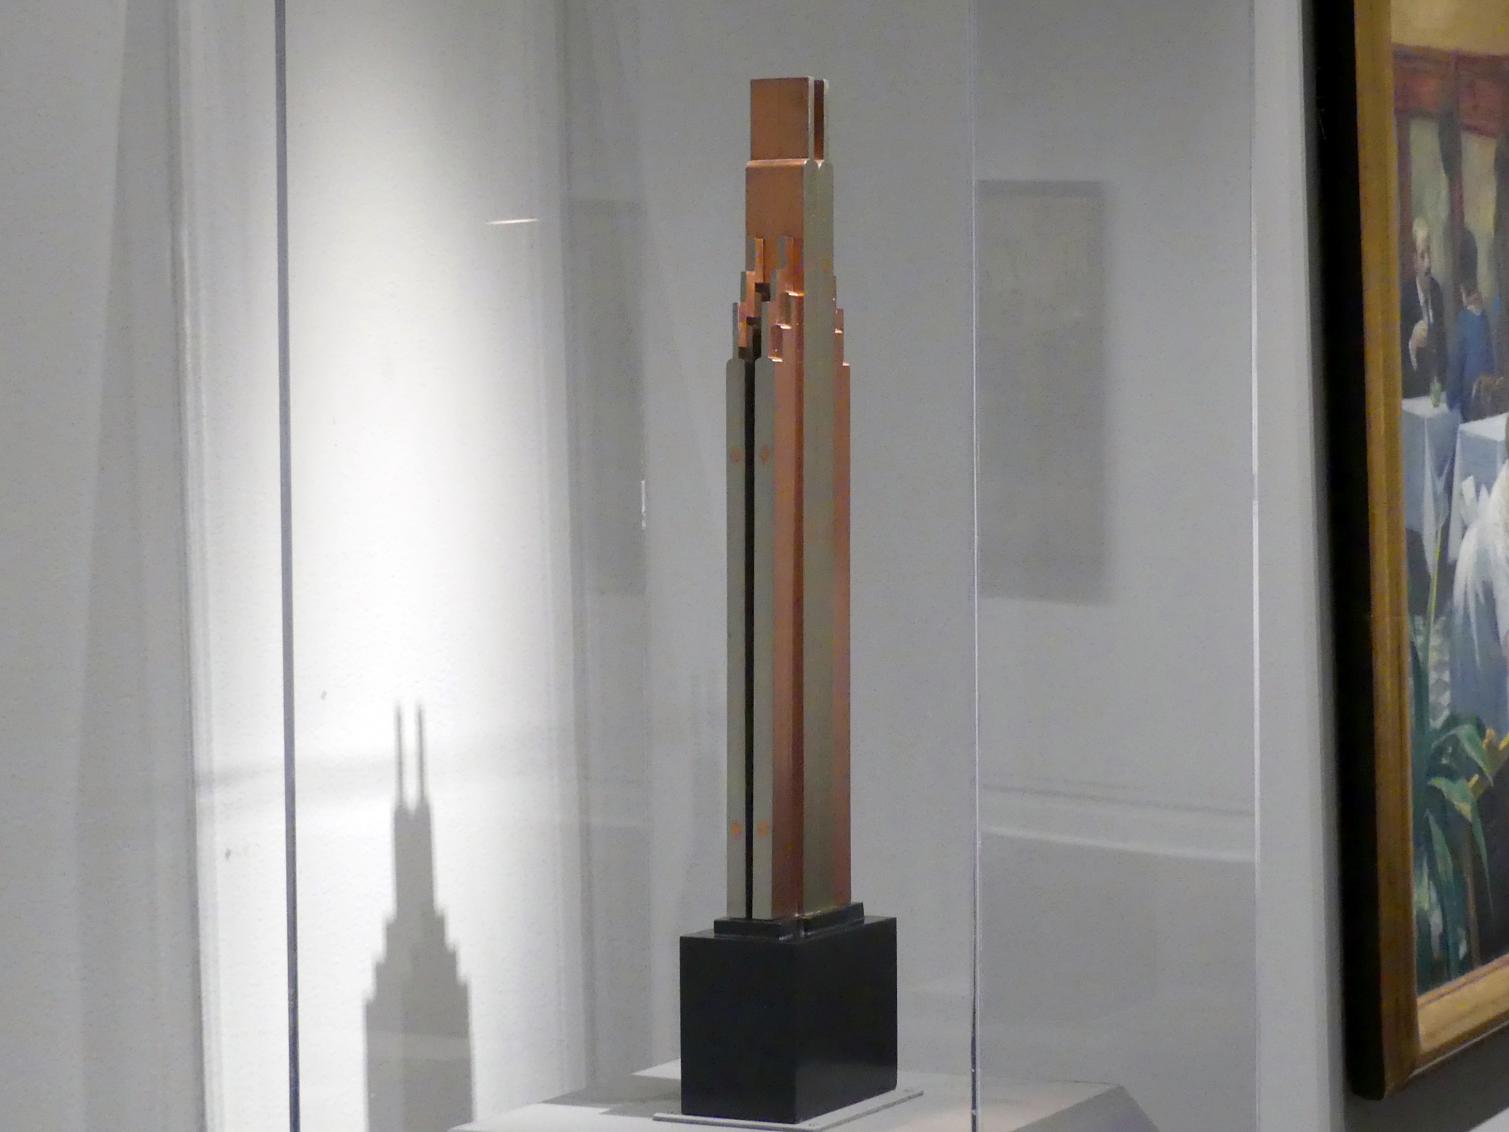 John Henry Bradley Storrs (1927), Formen im Raum Nr. 1, New York, Metropolitan Museum of Art (Met), Saal 902, um 1927, Bild 3/4